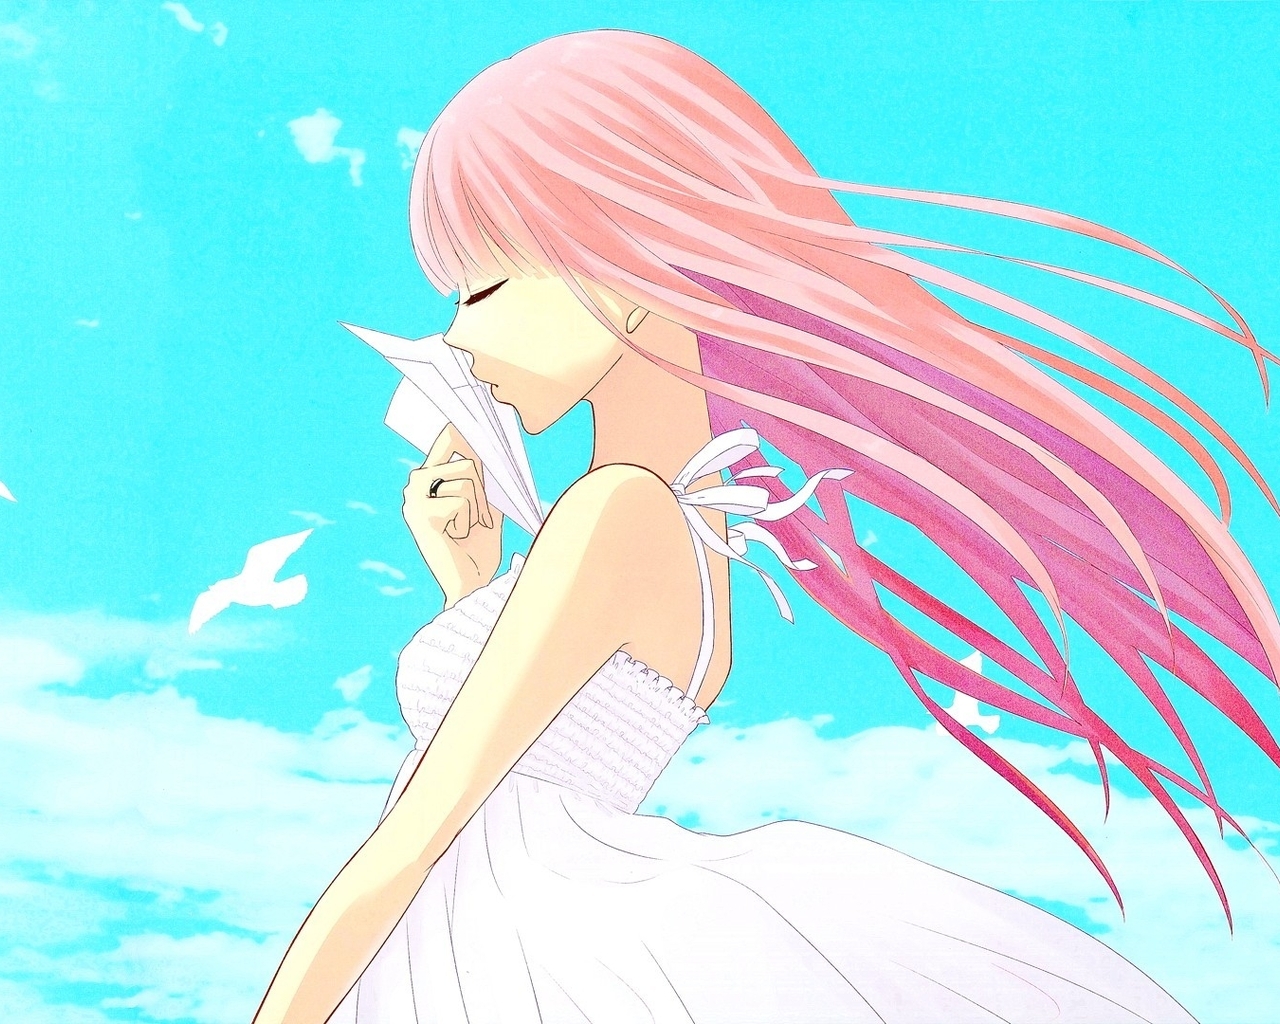 Картинка: Девушка, волосы, розовые, самолётик, небо, облака, птицы, платье, ветер